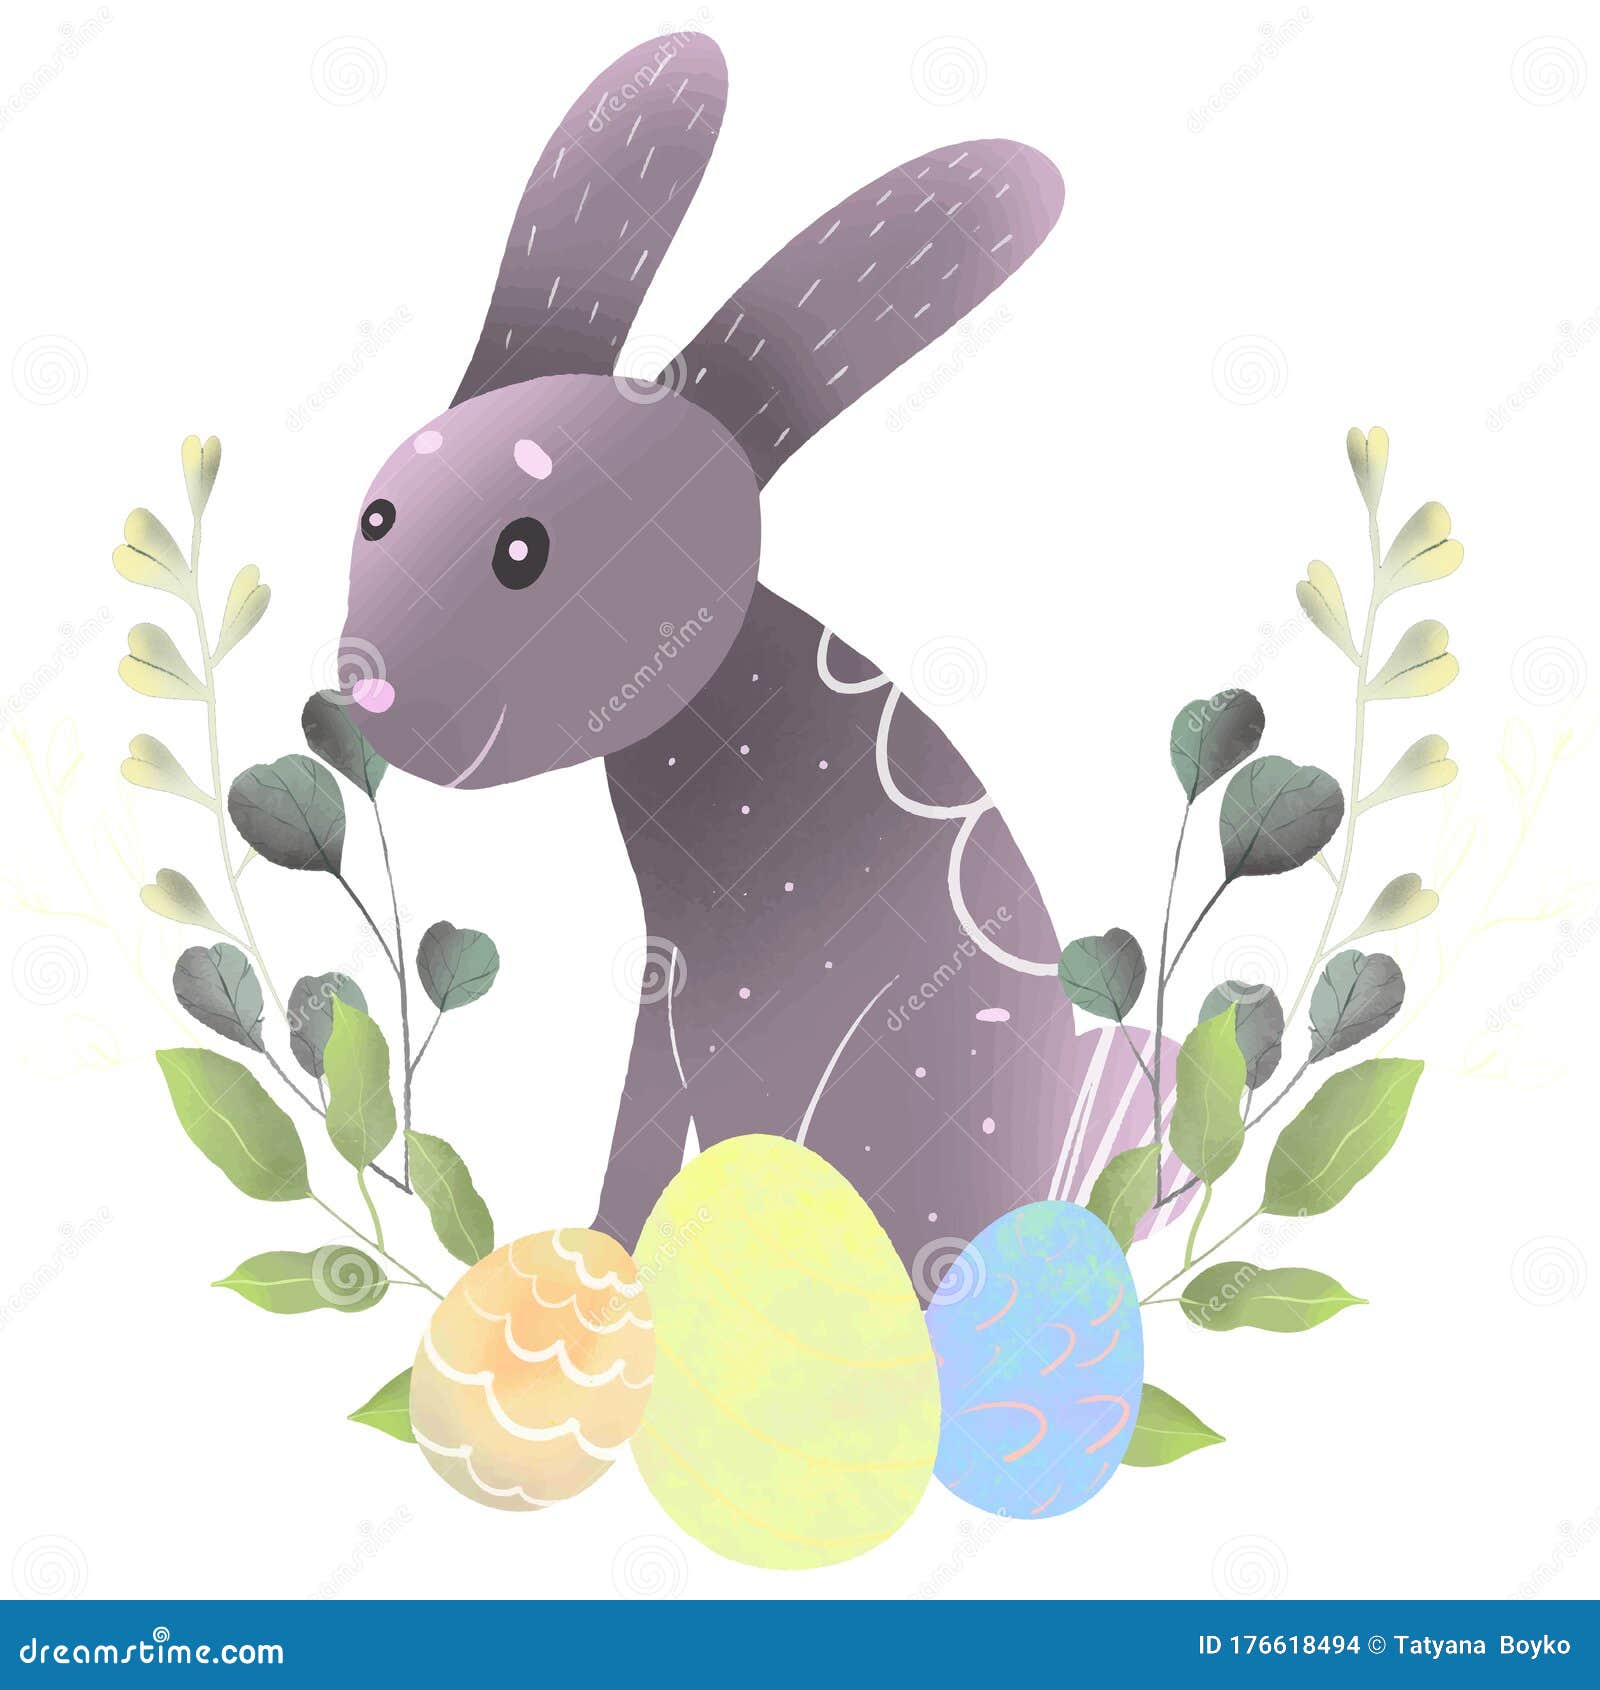 10 Easter Bunny Digital Backgrounds in both JPEG /& PNG formats